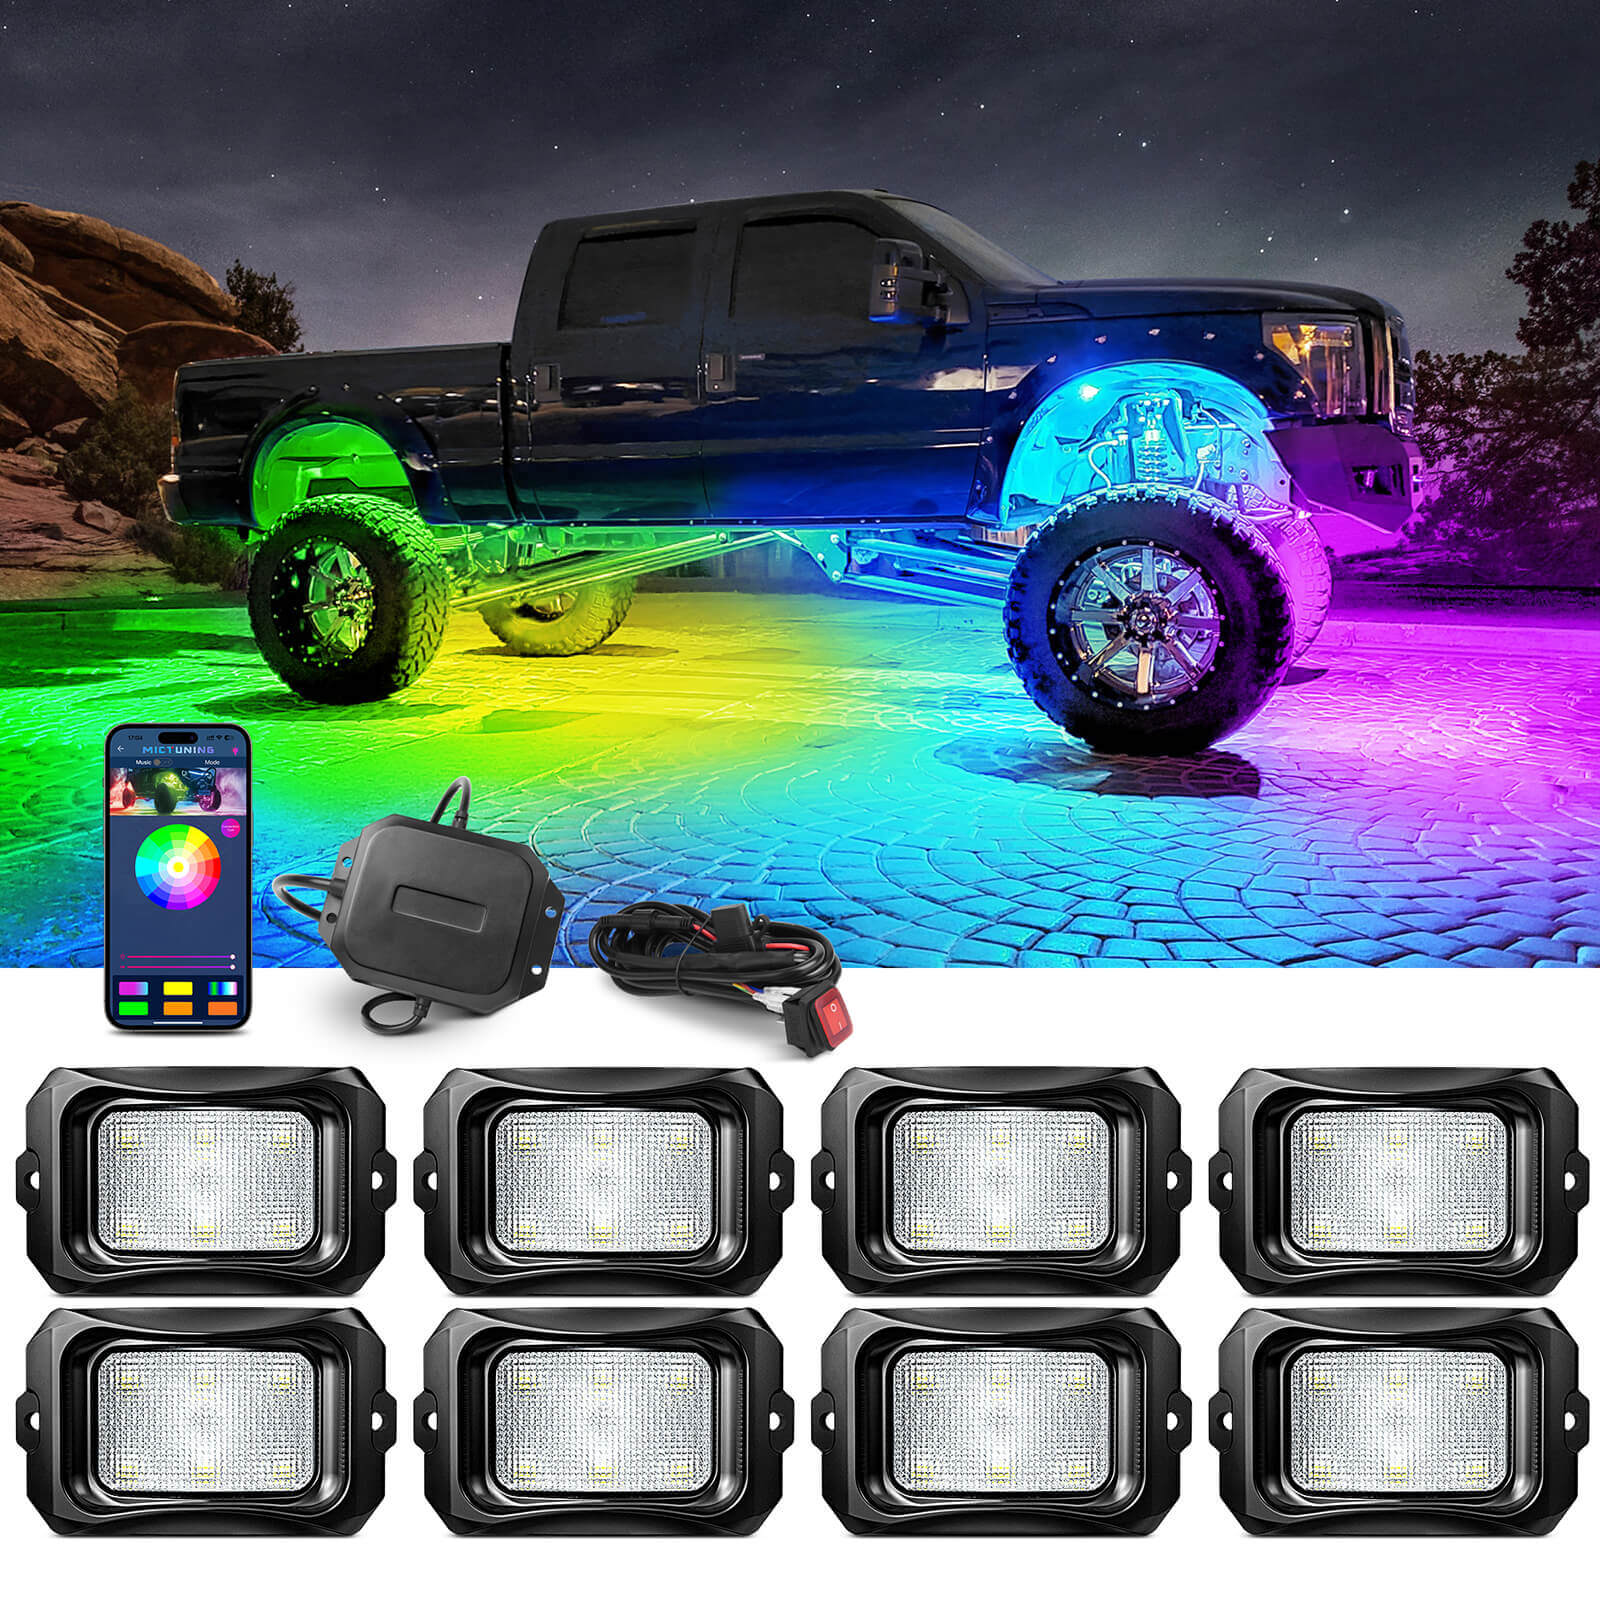 MICTUNING C2 2nd-Gen RGB+IC LED Rock Lights for Trucks, Jeep, ATV, UTV, Underglow Lighting Kit, 8 Pods